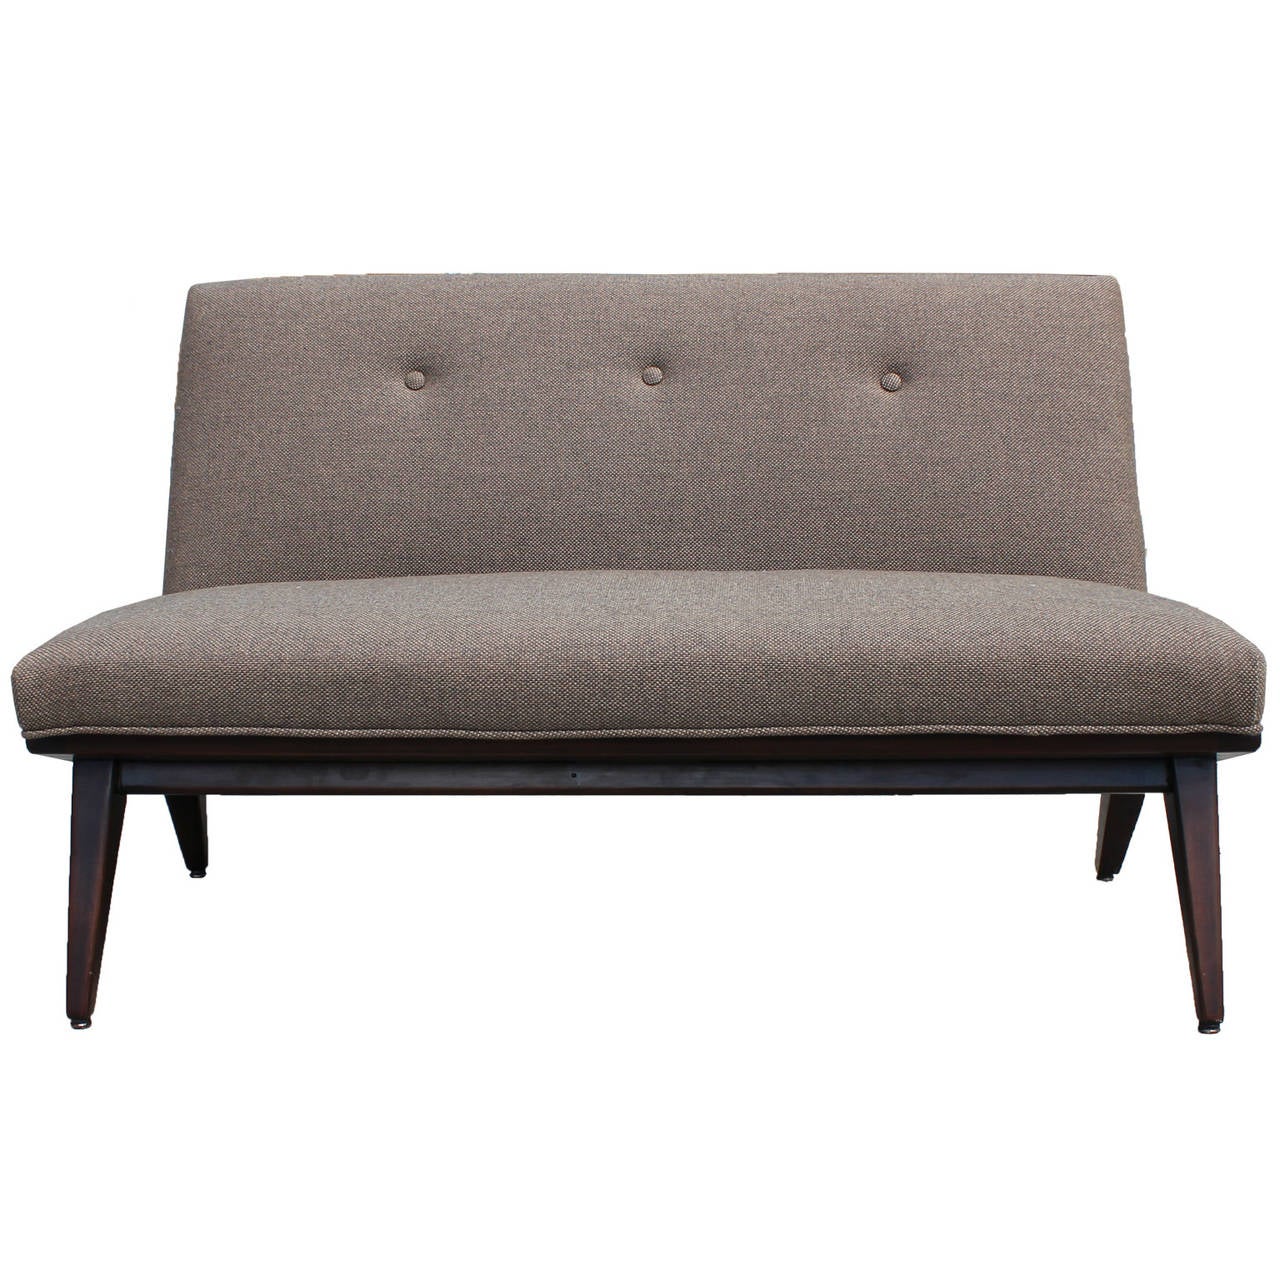 Beautiful Jens Risom settee or armless love seat. Angled walnut base. New Upholstery.